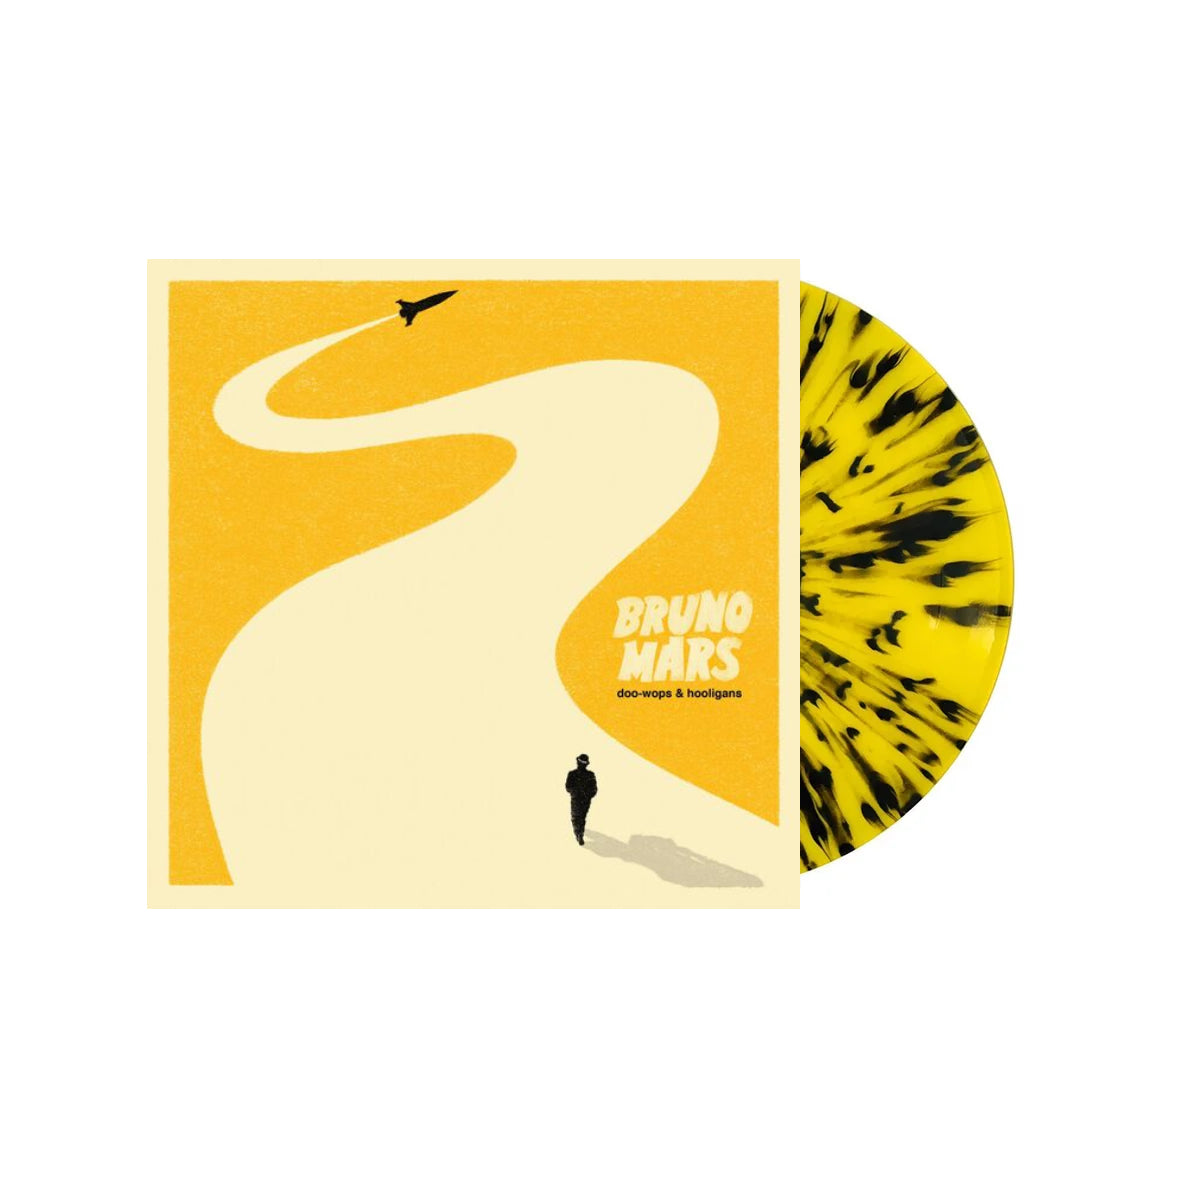 Bruno Mars - Doo-Wops & Hooligans: Limited Translucent Yellow with Black Splatter Vinyl LP